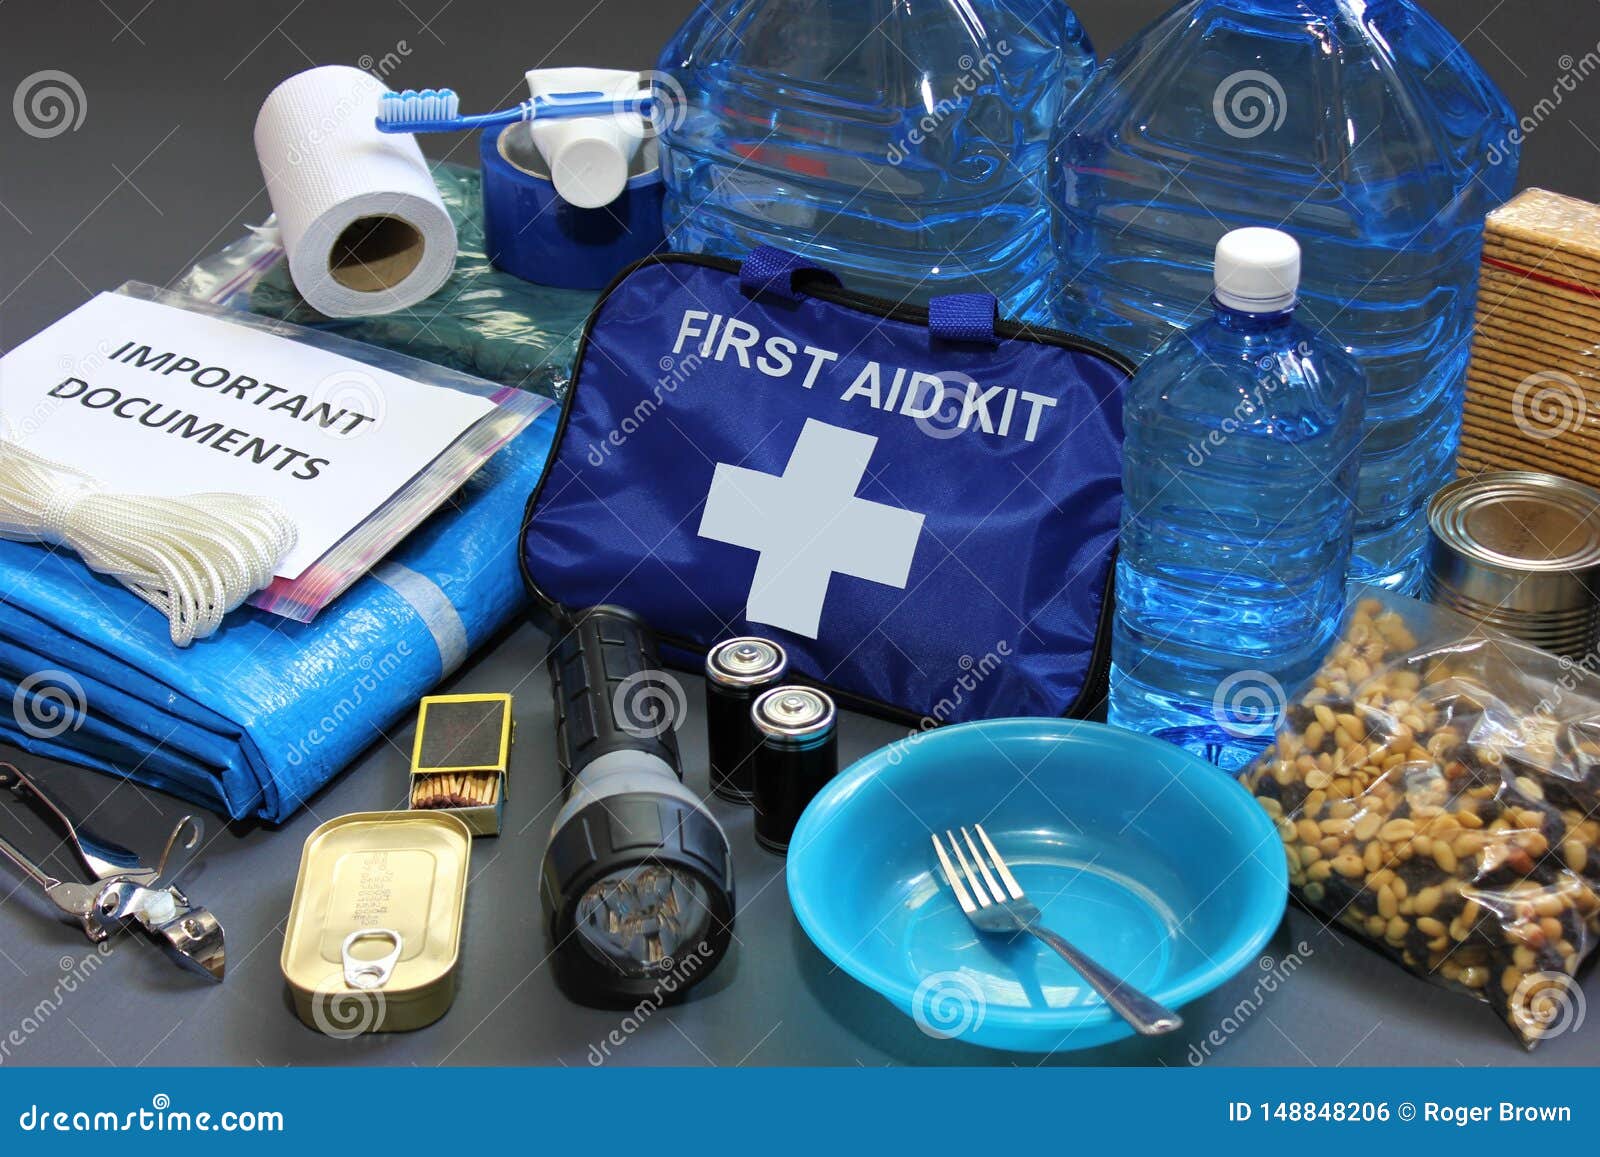 disaster preparedness items